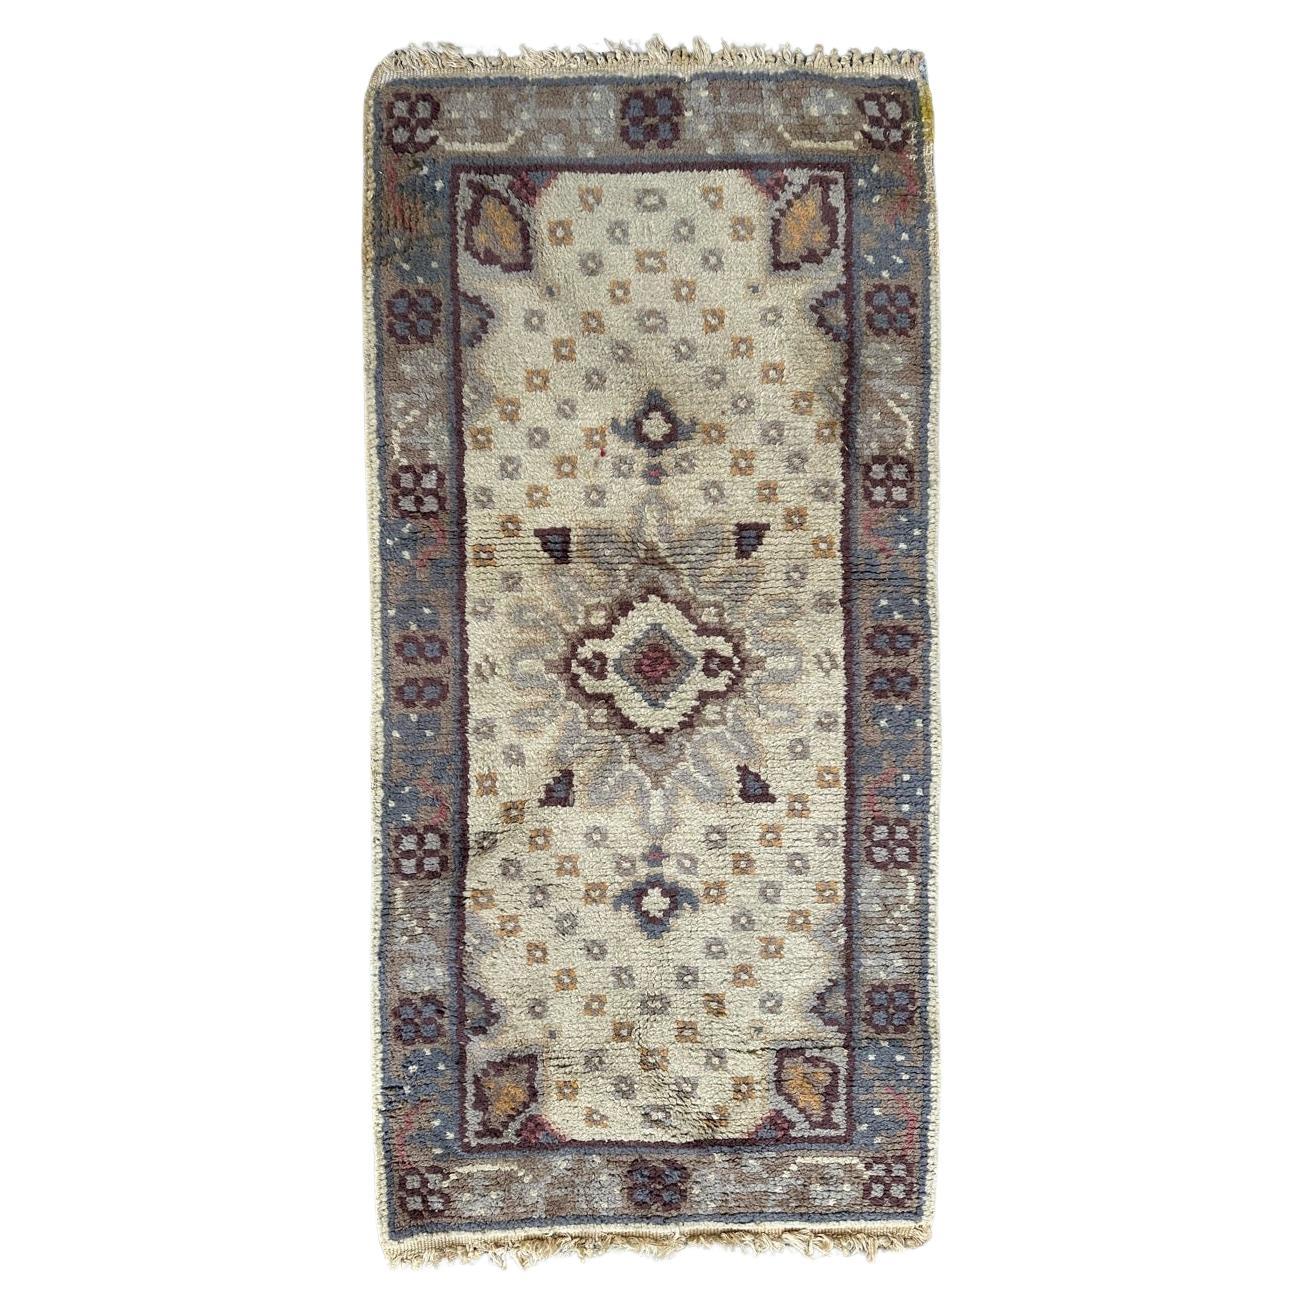 Beautiful early 20th century European rug